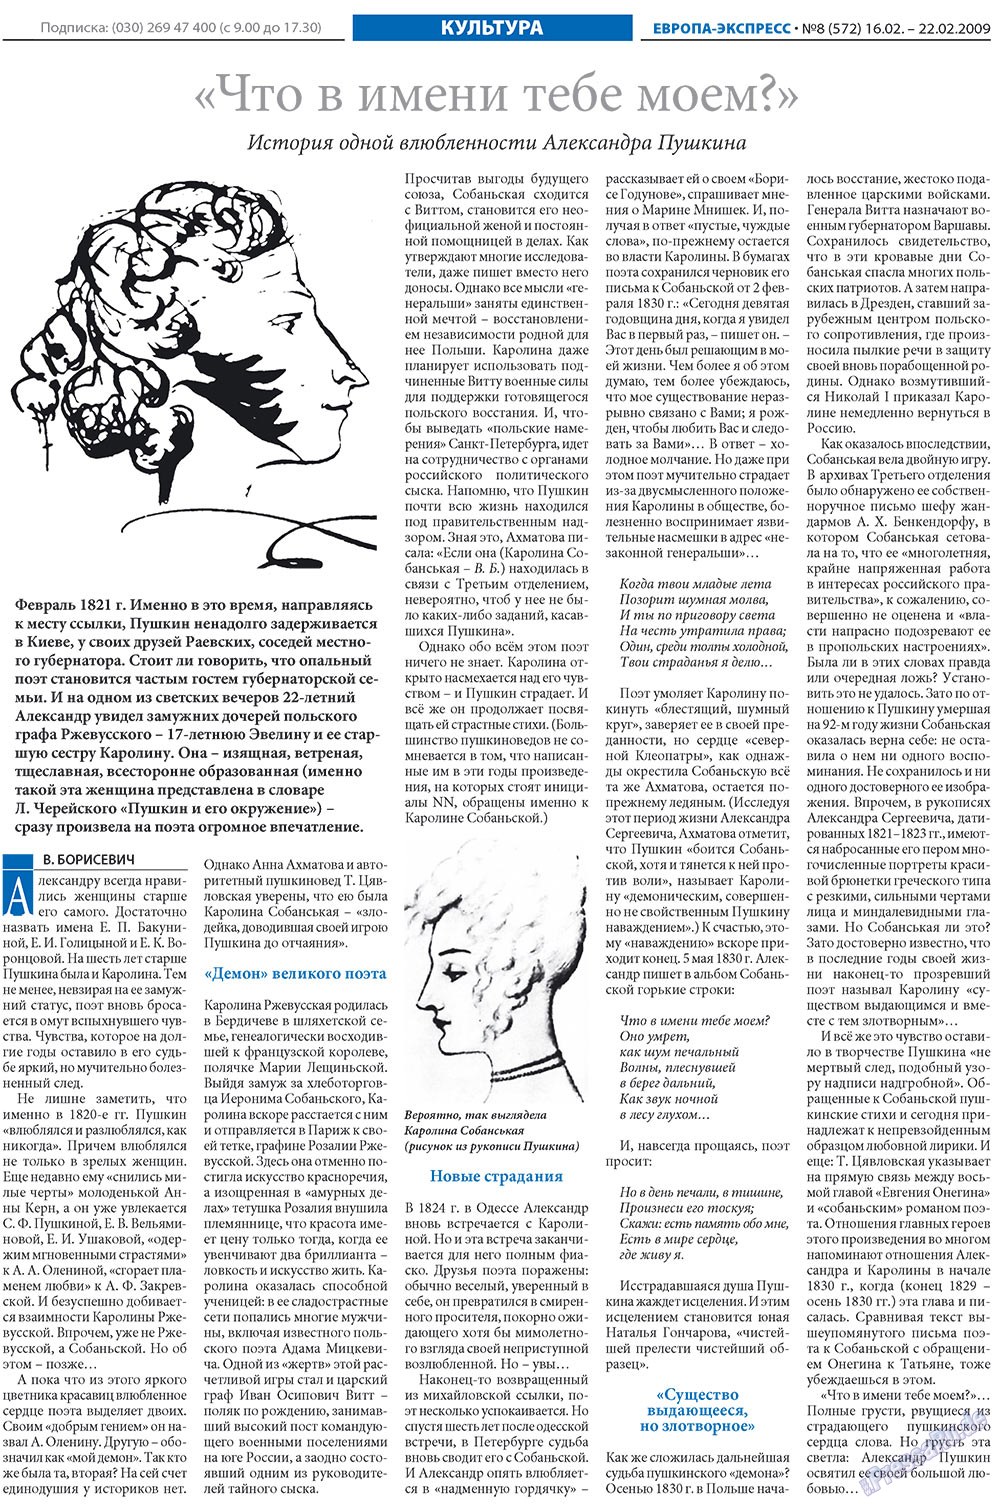 Европа экспресс, газета. 2009 №8 стр.17